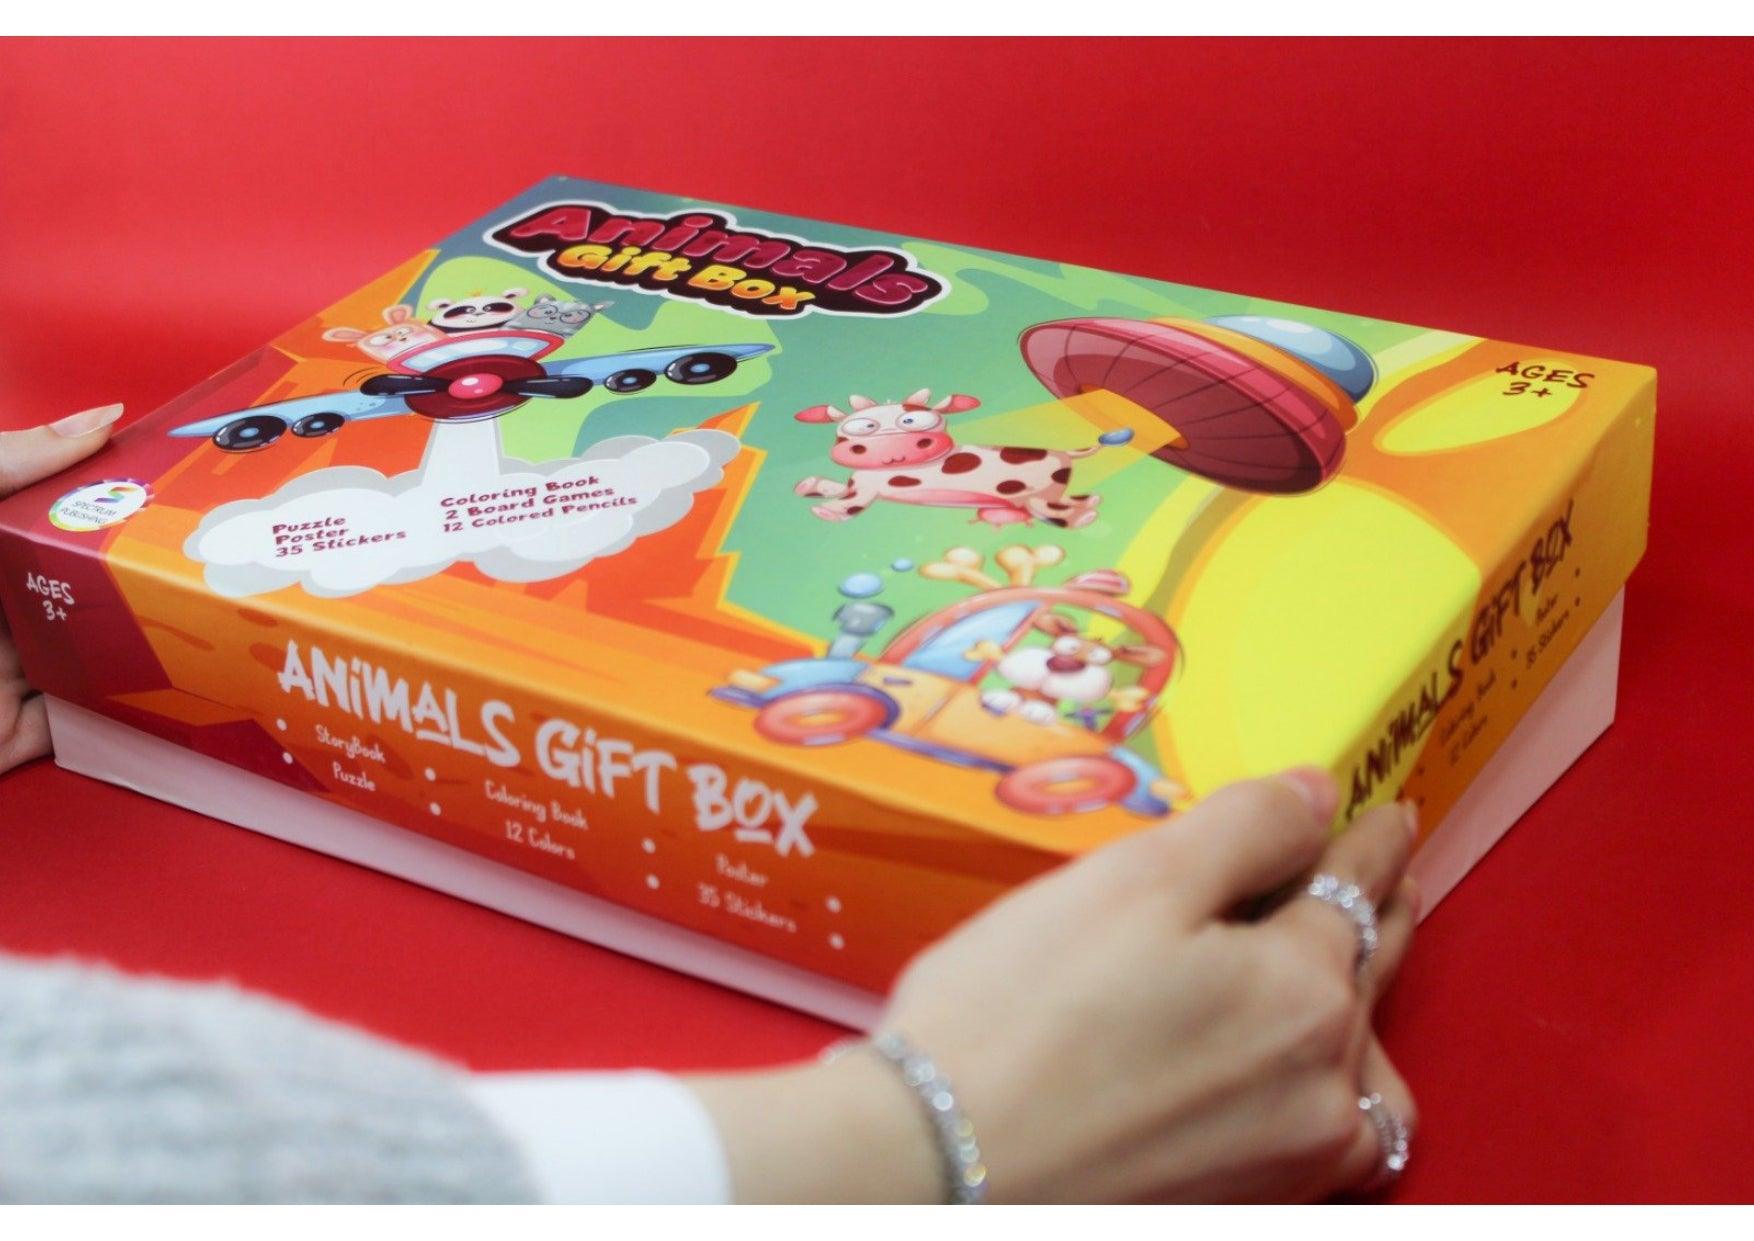 Animals Gift Box - Ourkids - Spectrum Publishing